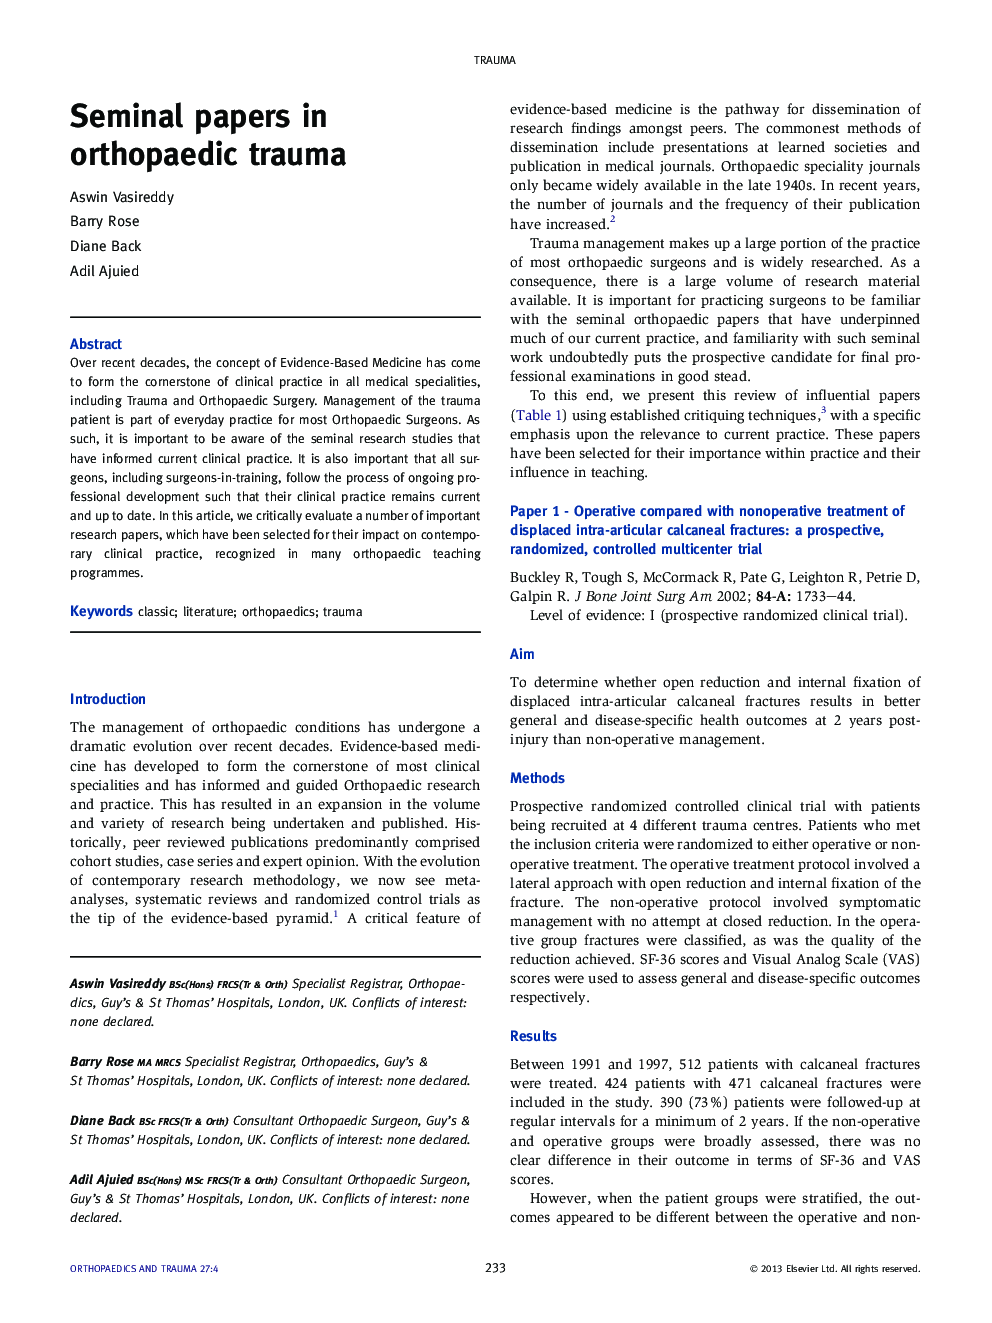 Seminal papers in orthopaedic trauma